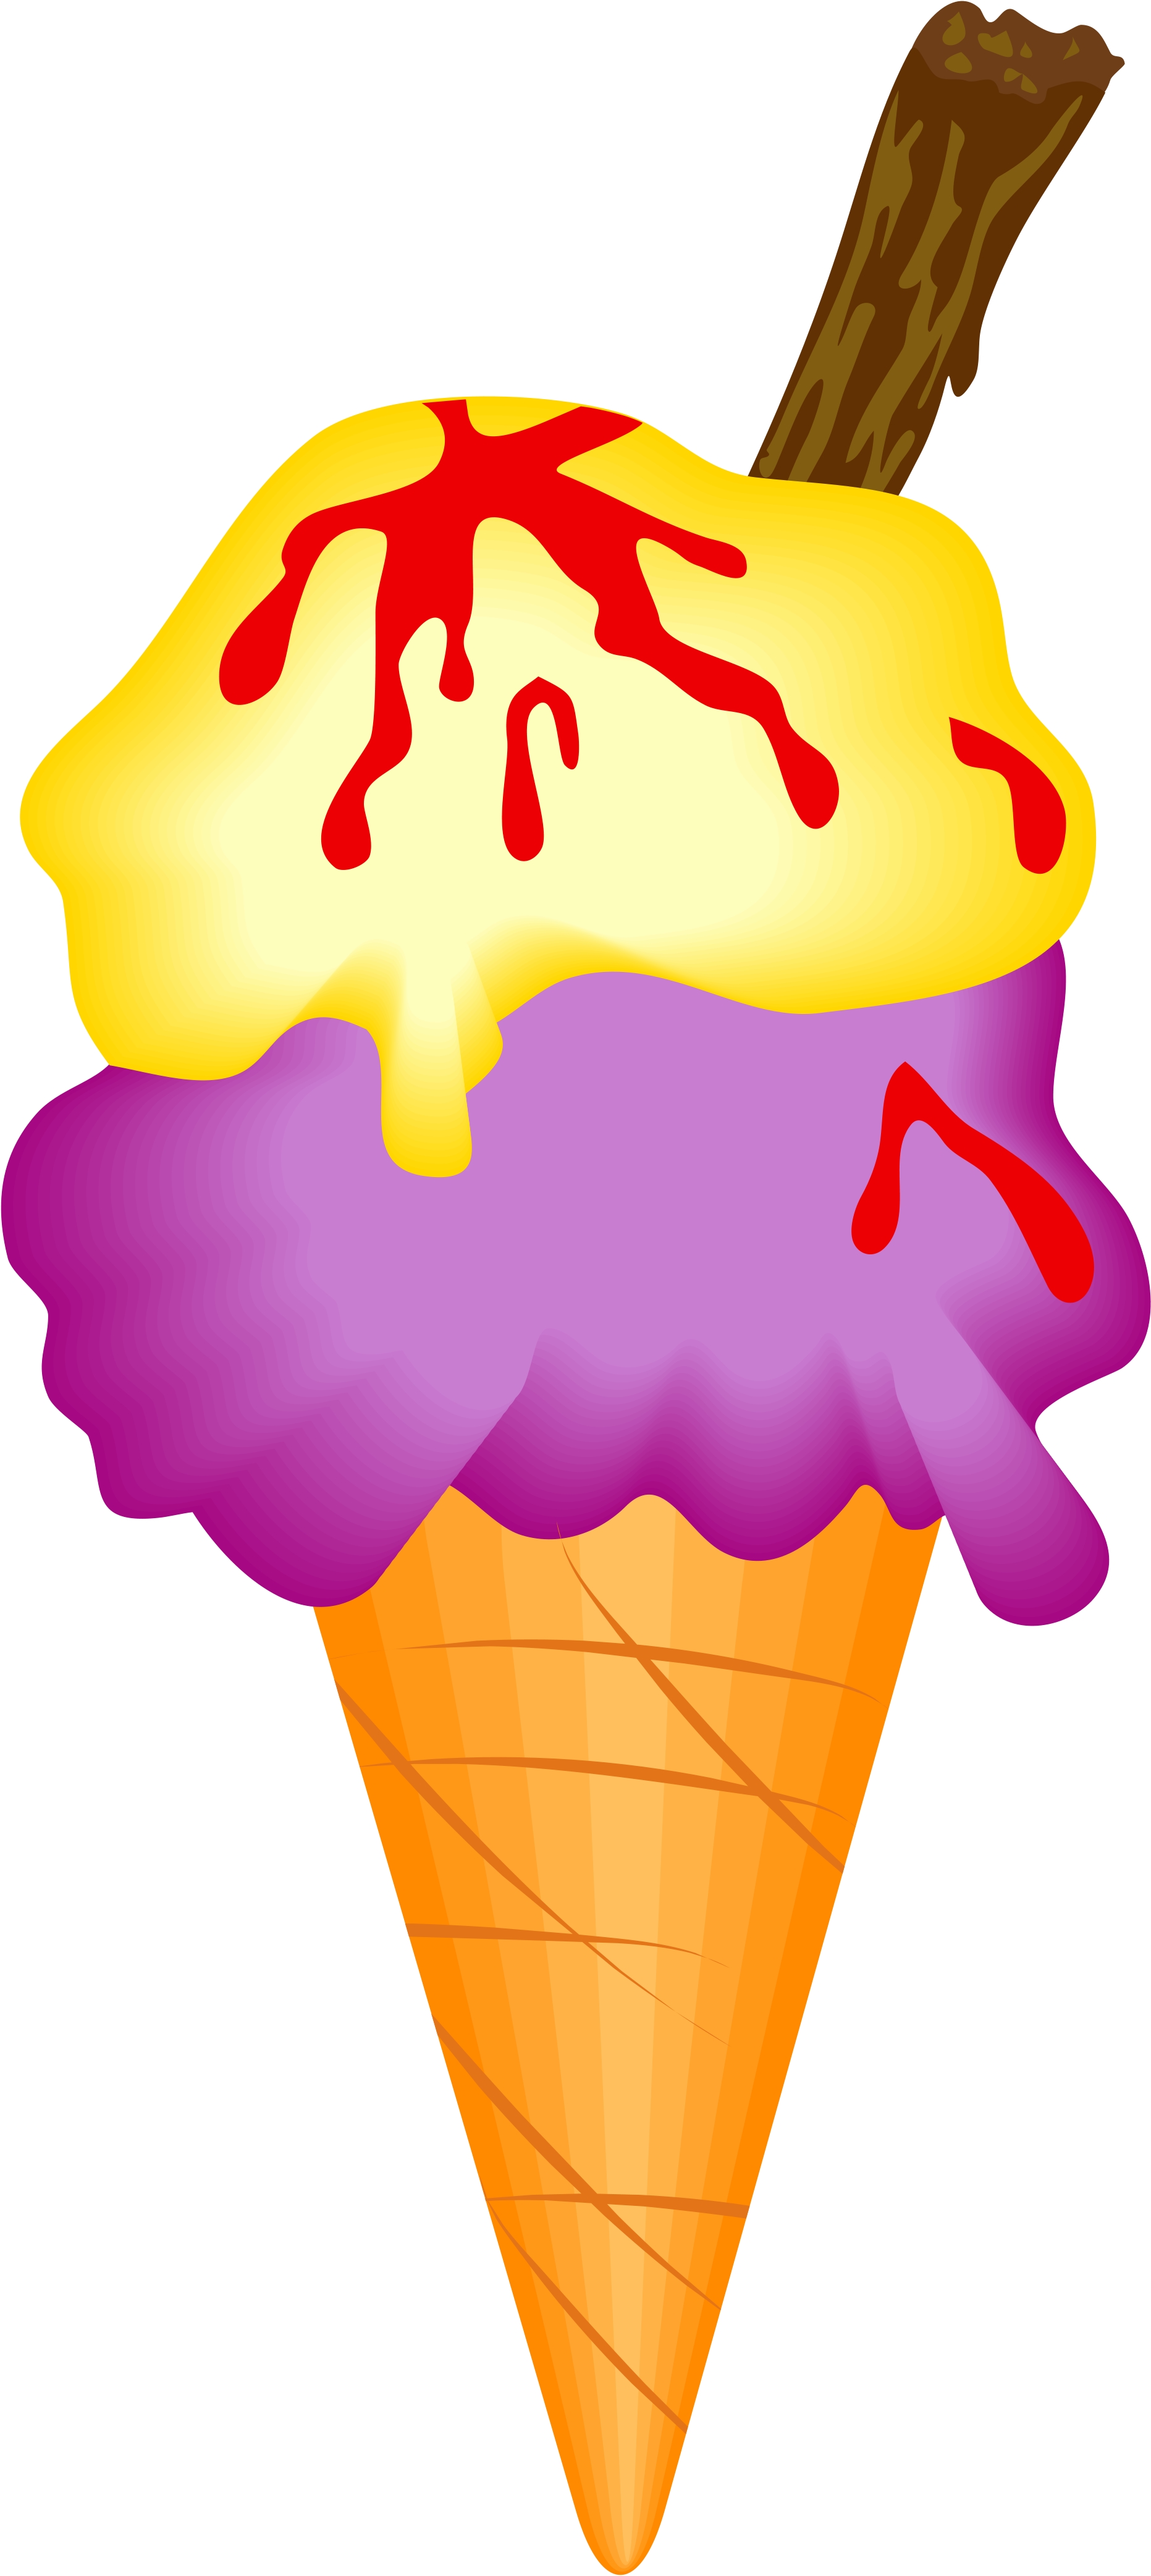 Ice Cream | Free Images - vector clip art online ...